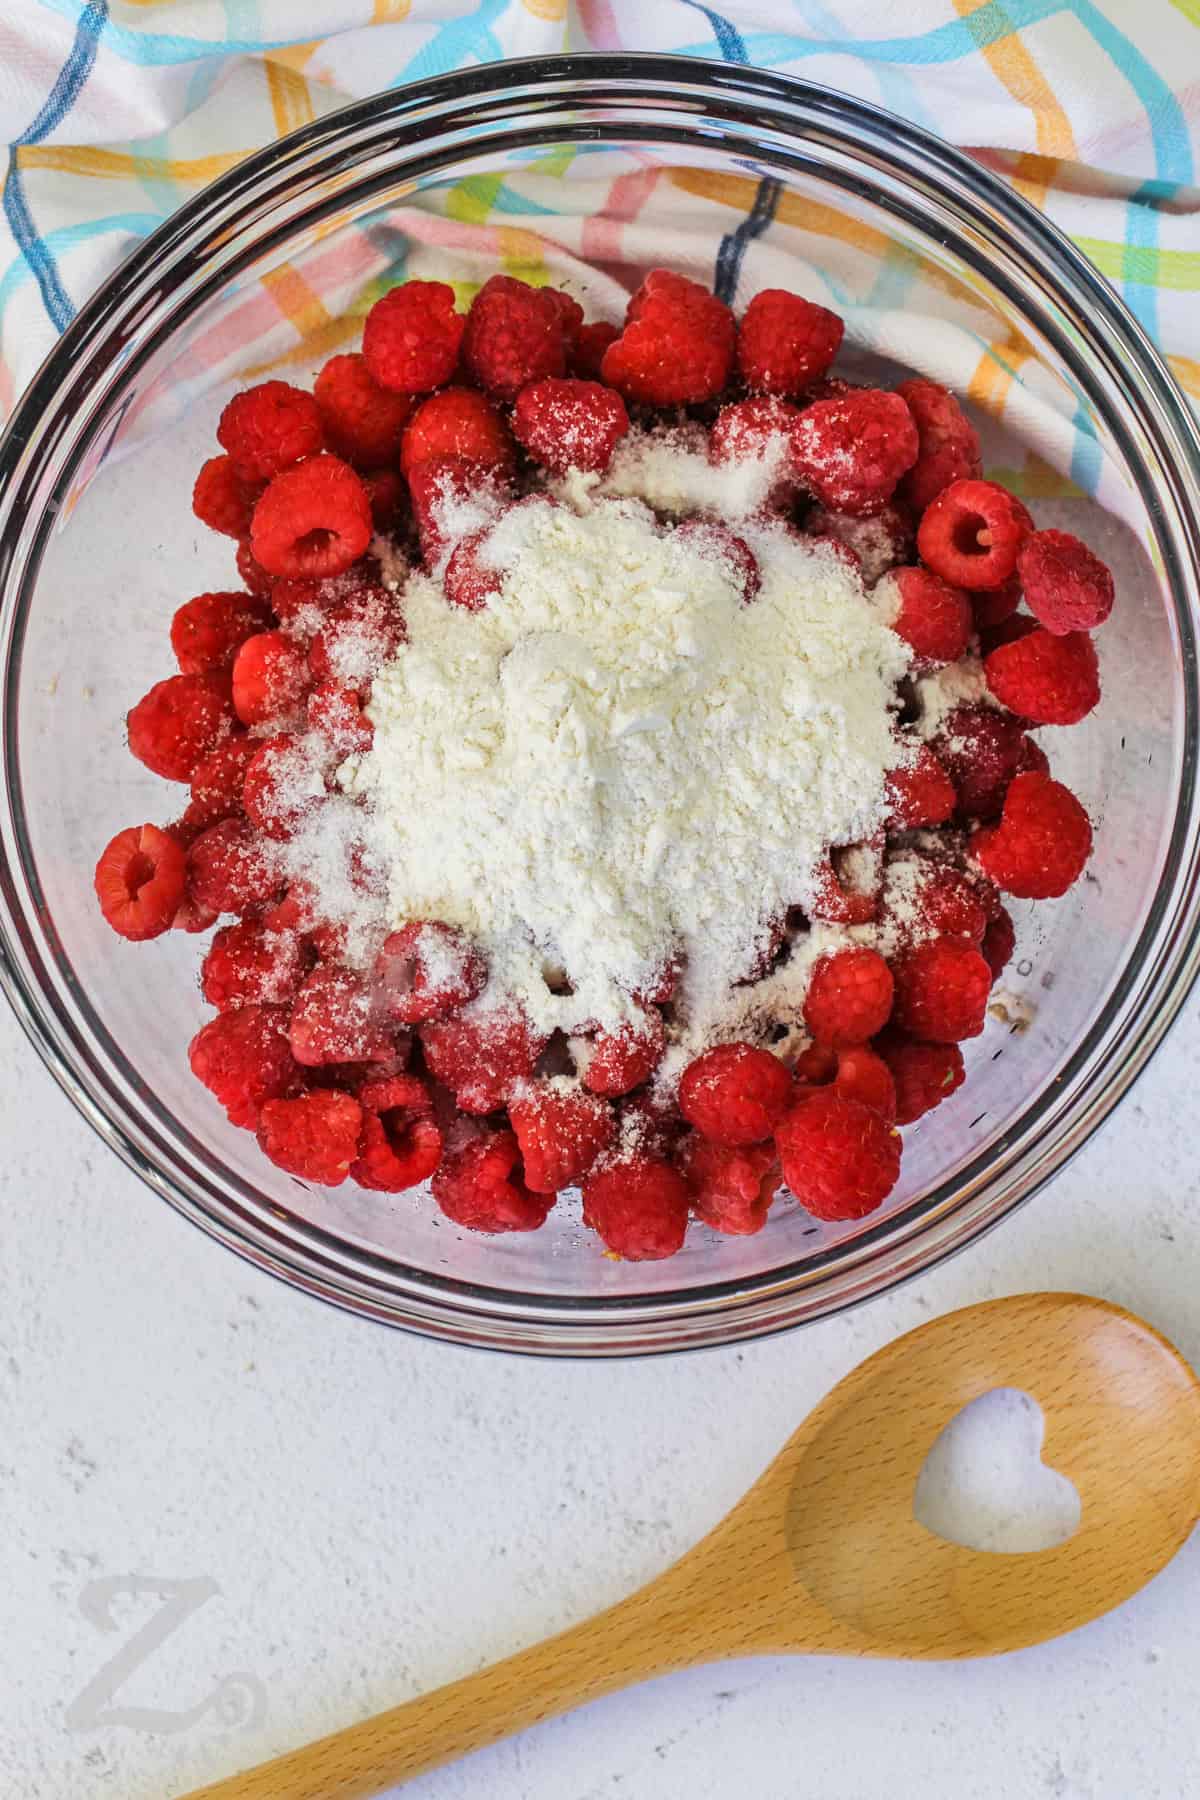 raspberries, sugar and flour in a clear bowl to make raspberry crisp